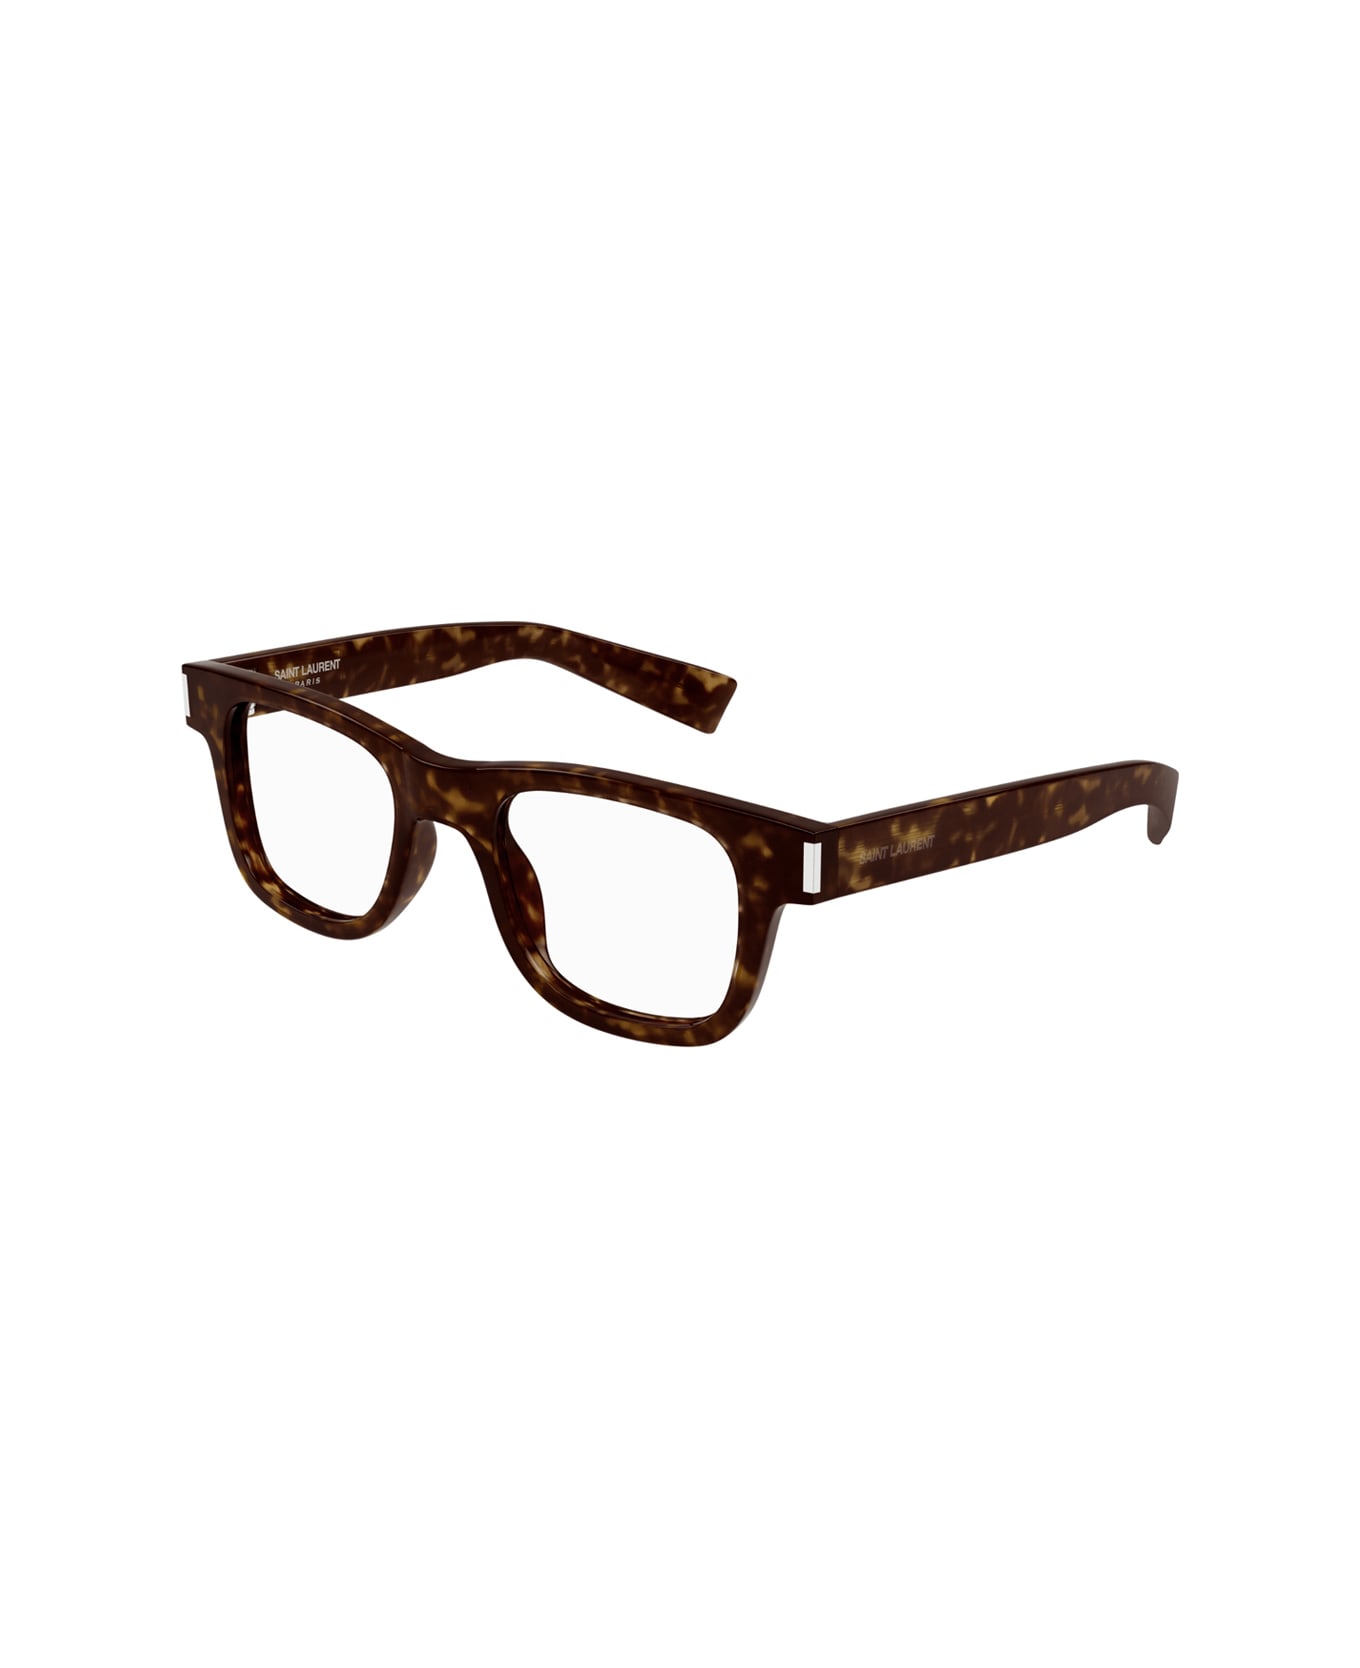 Saint Laurent Eyewear Sl 564 009 Glasses - Marrone